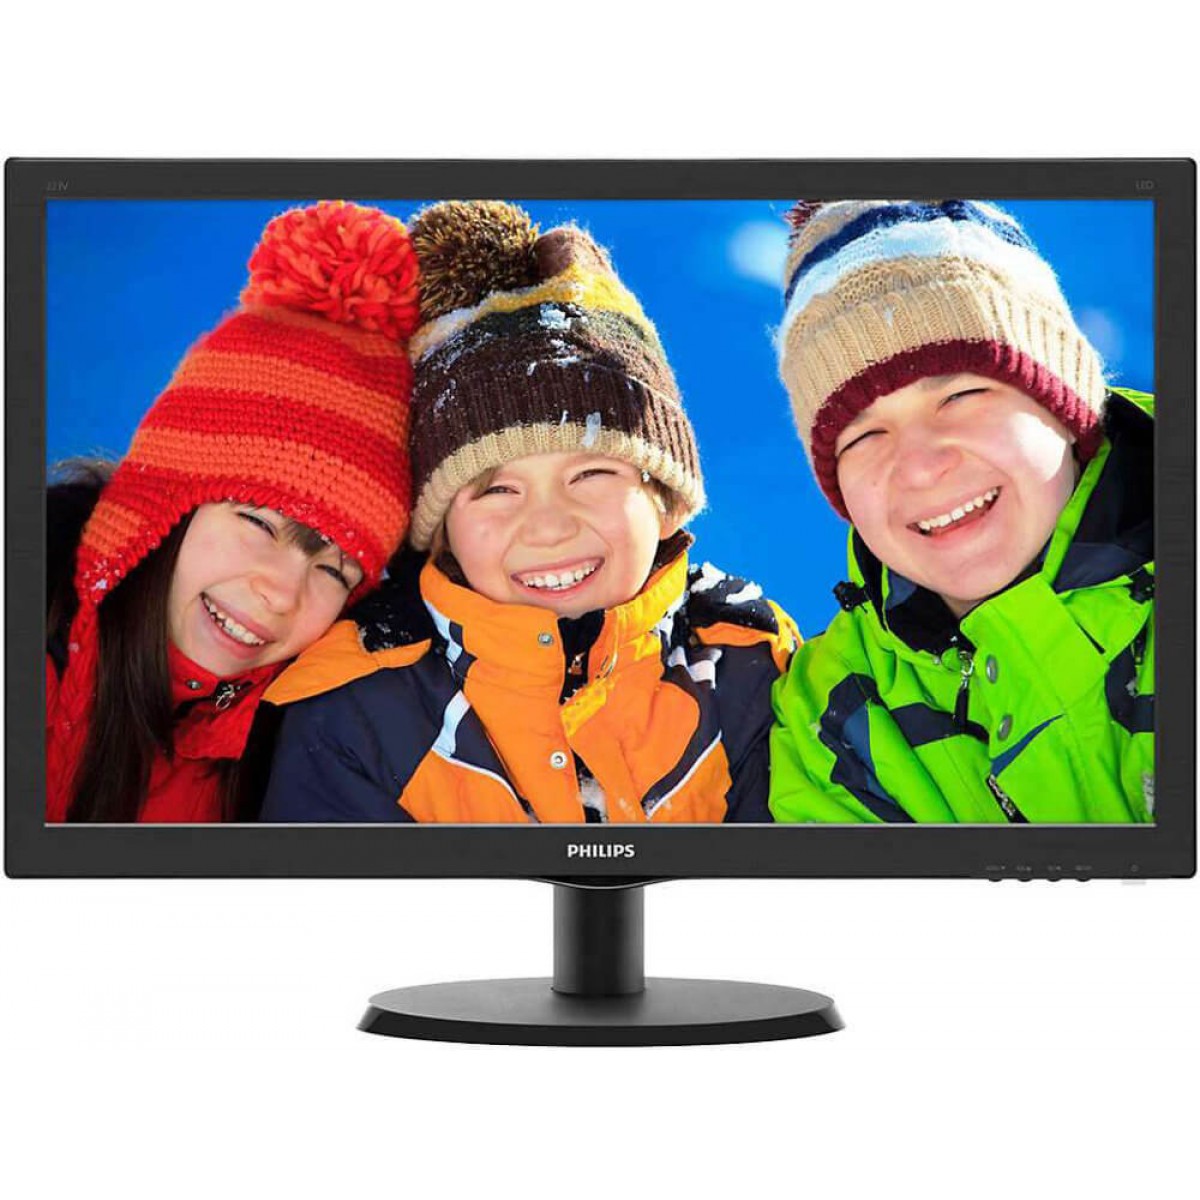 Monitor Philips 223V5LHSB2 LED LCD 21.5 Pol Full HD HDMI/VGA